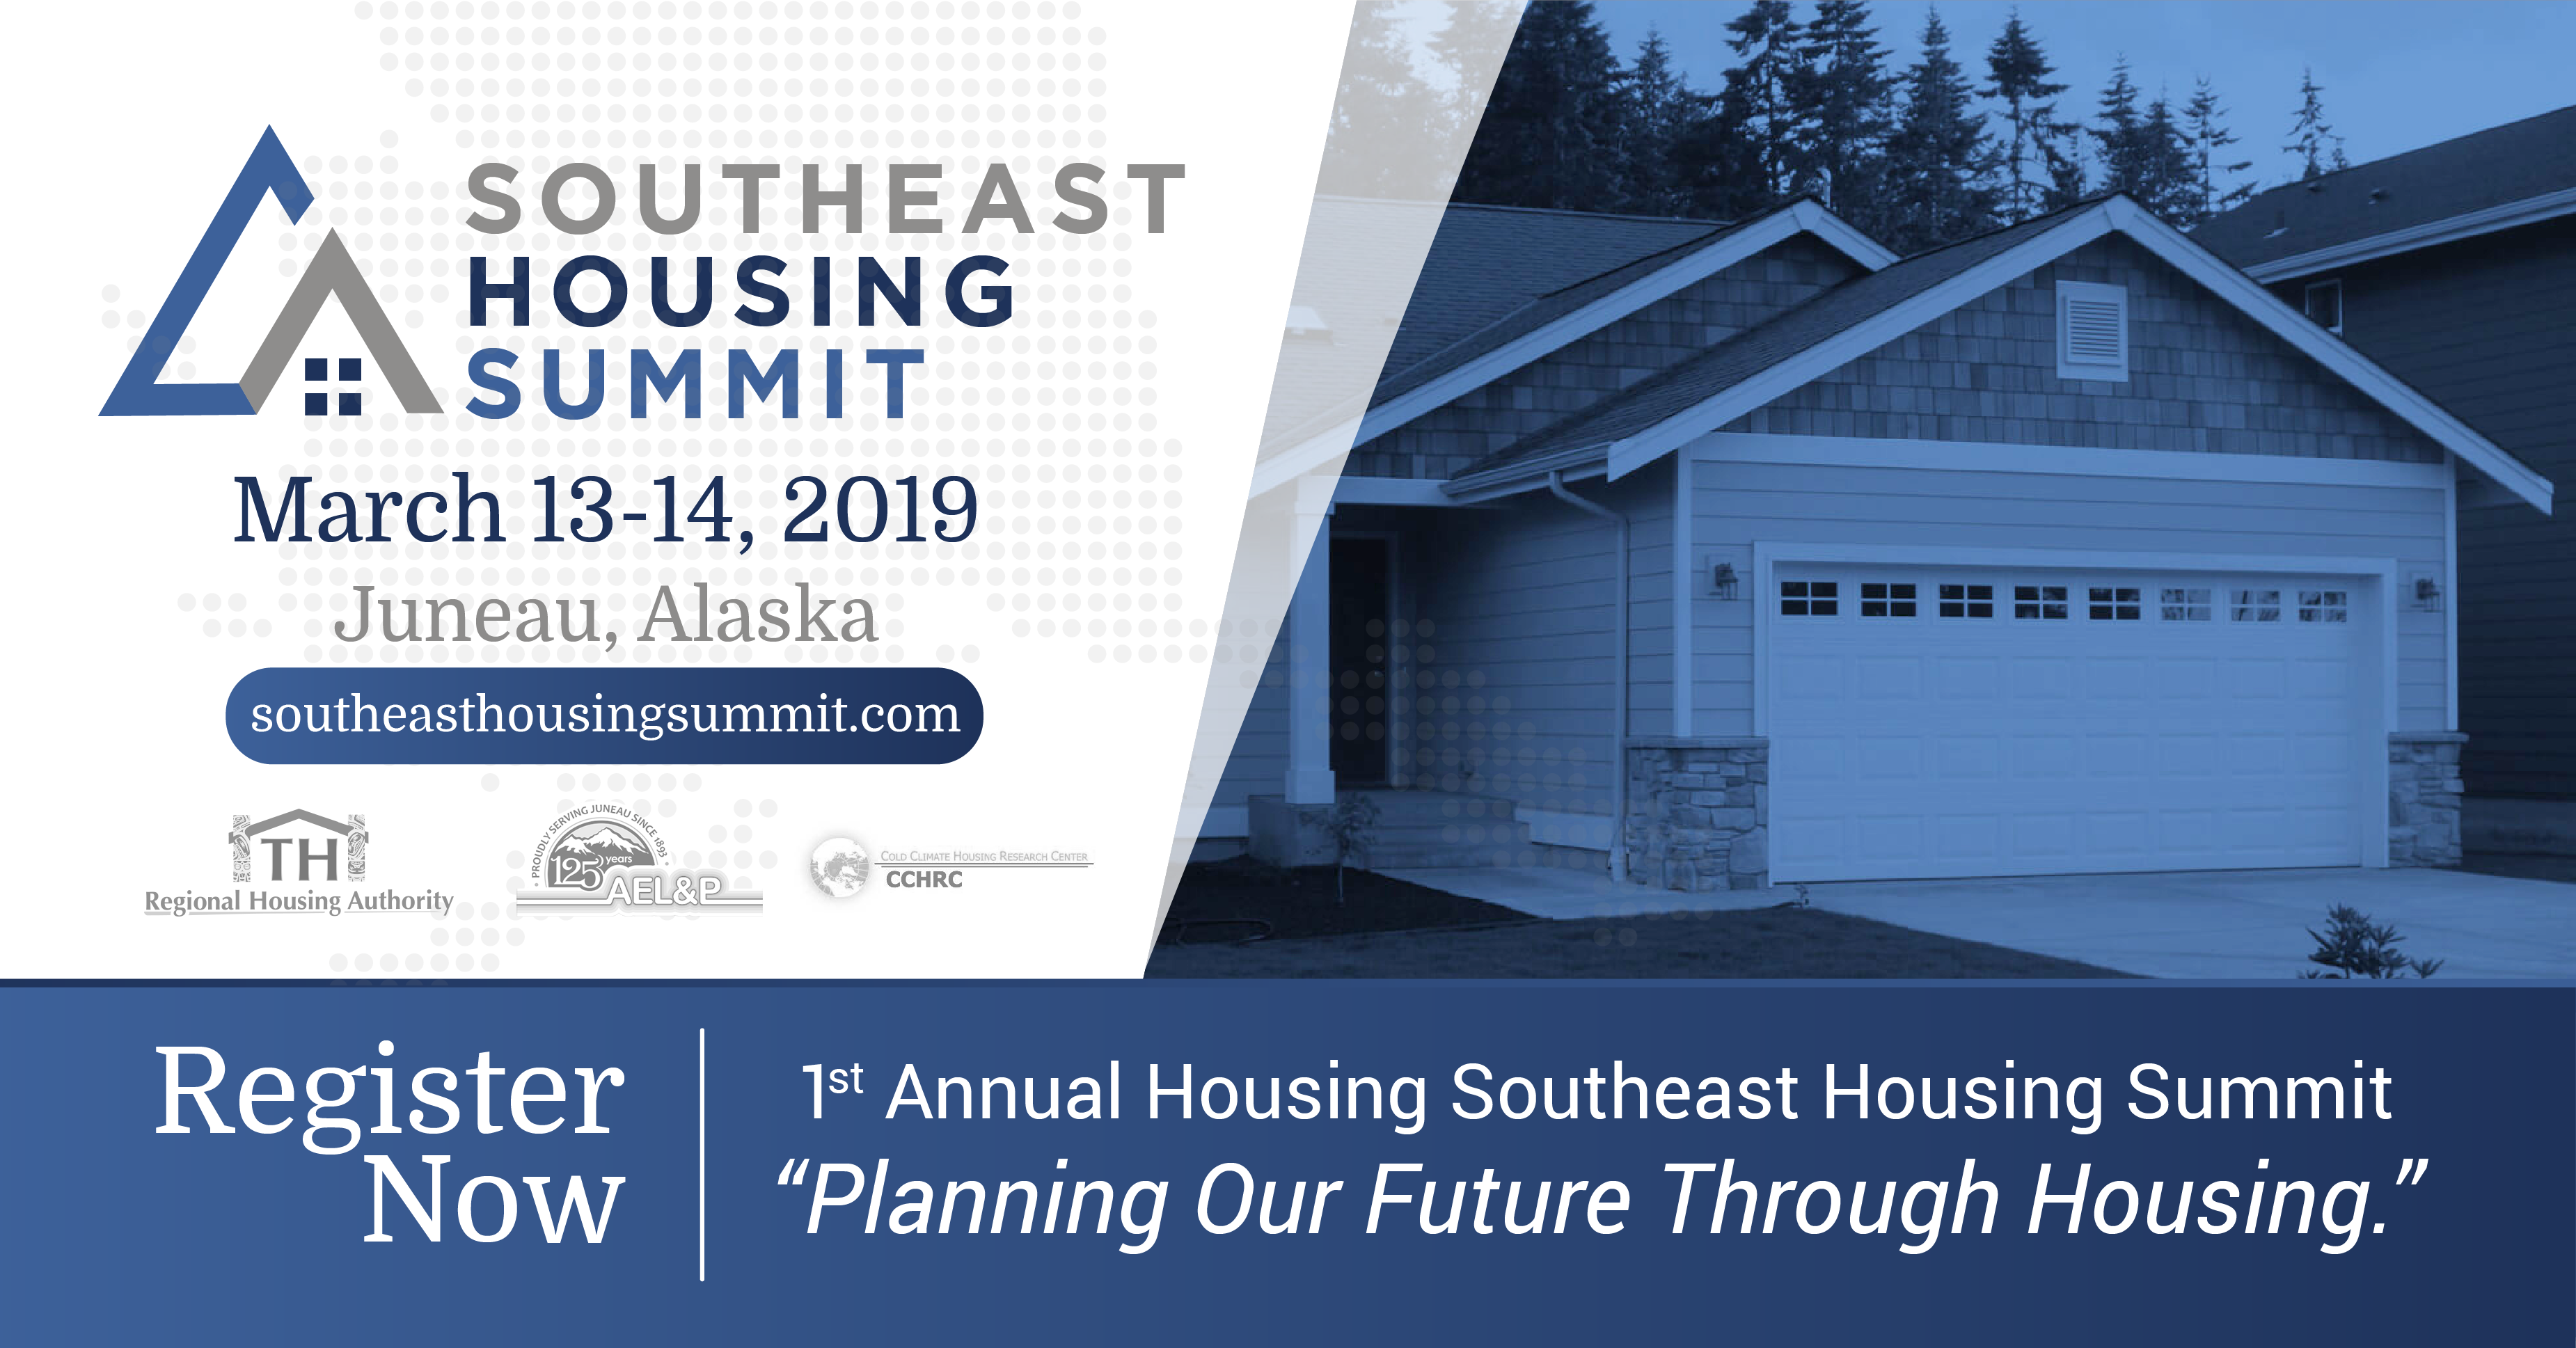 Southeast Housing Summit